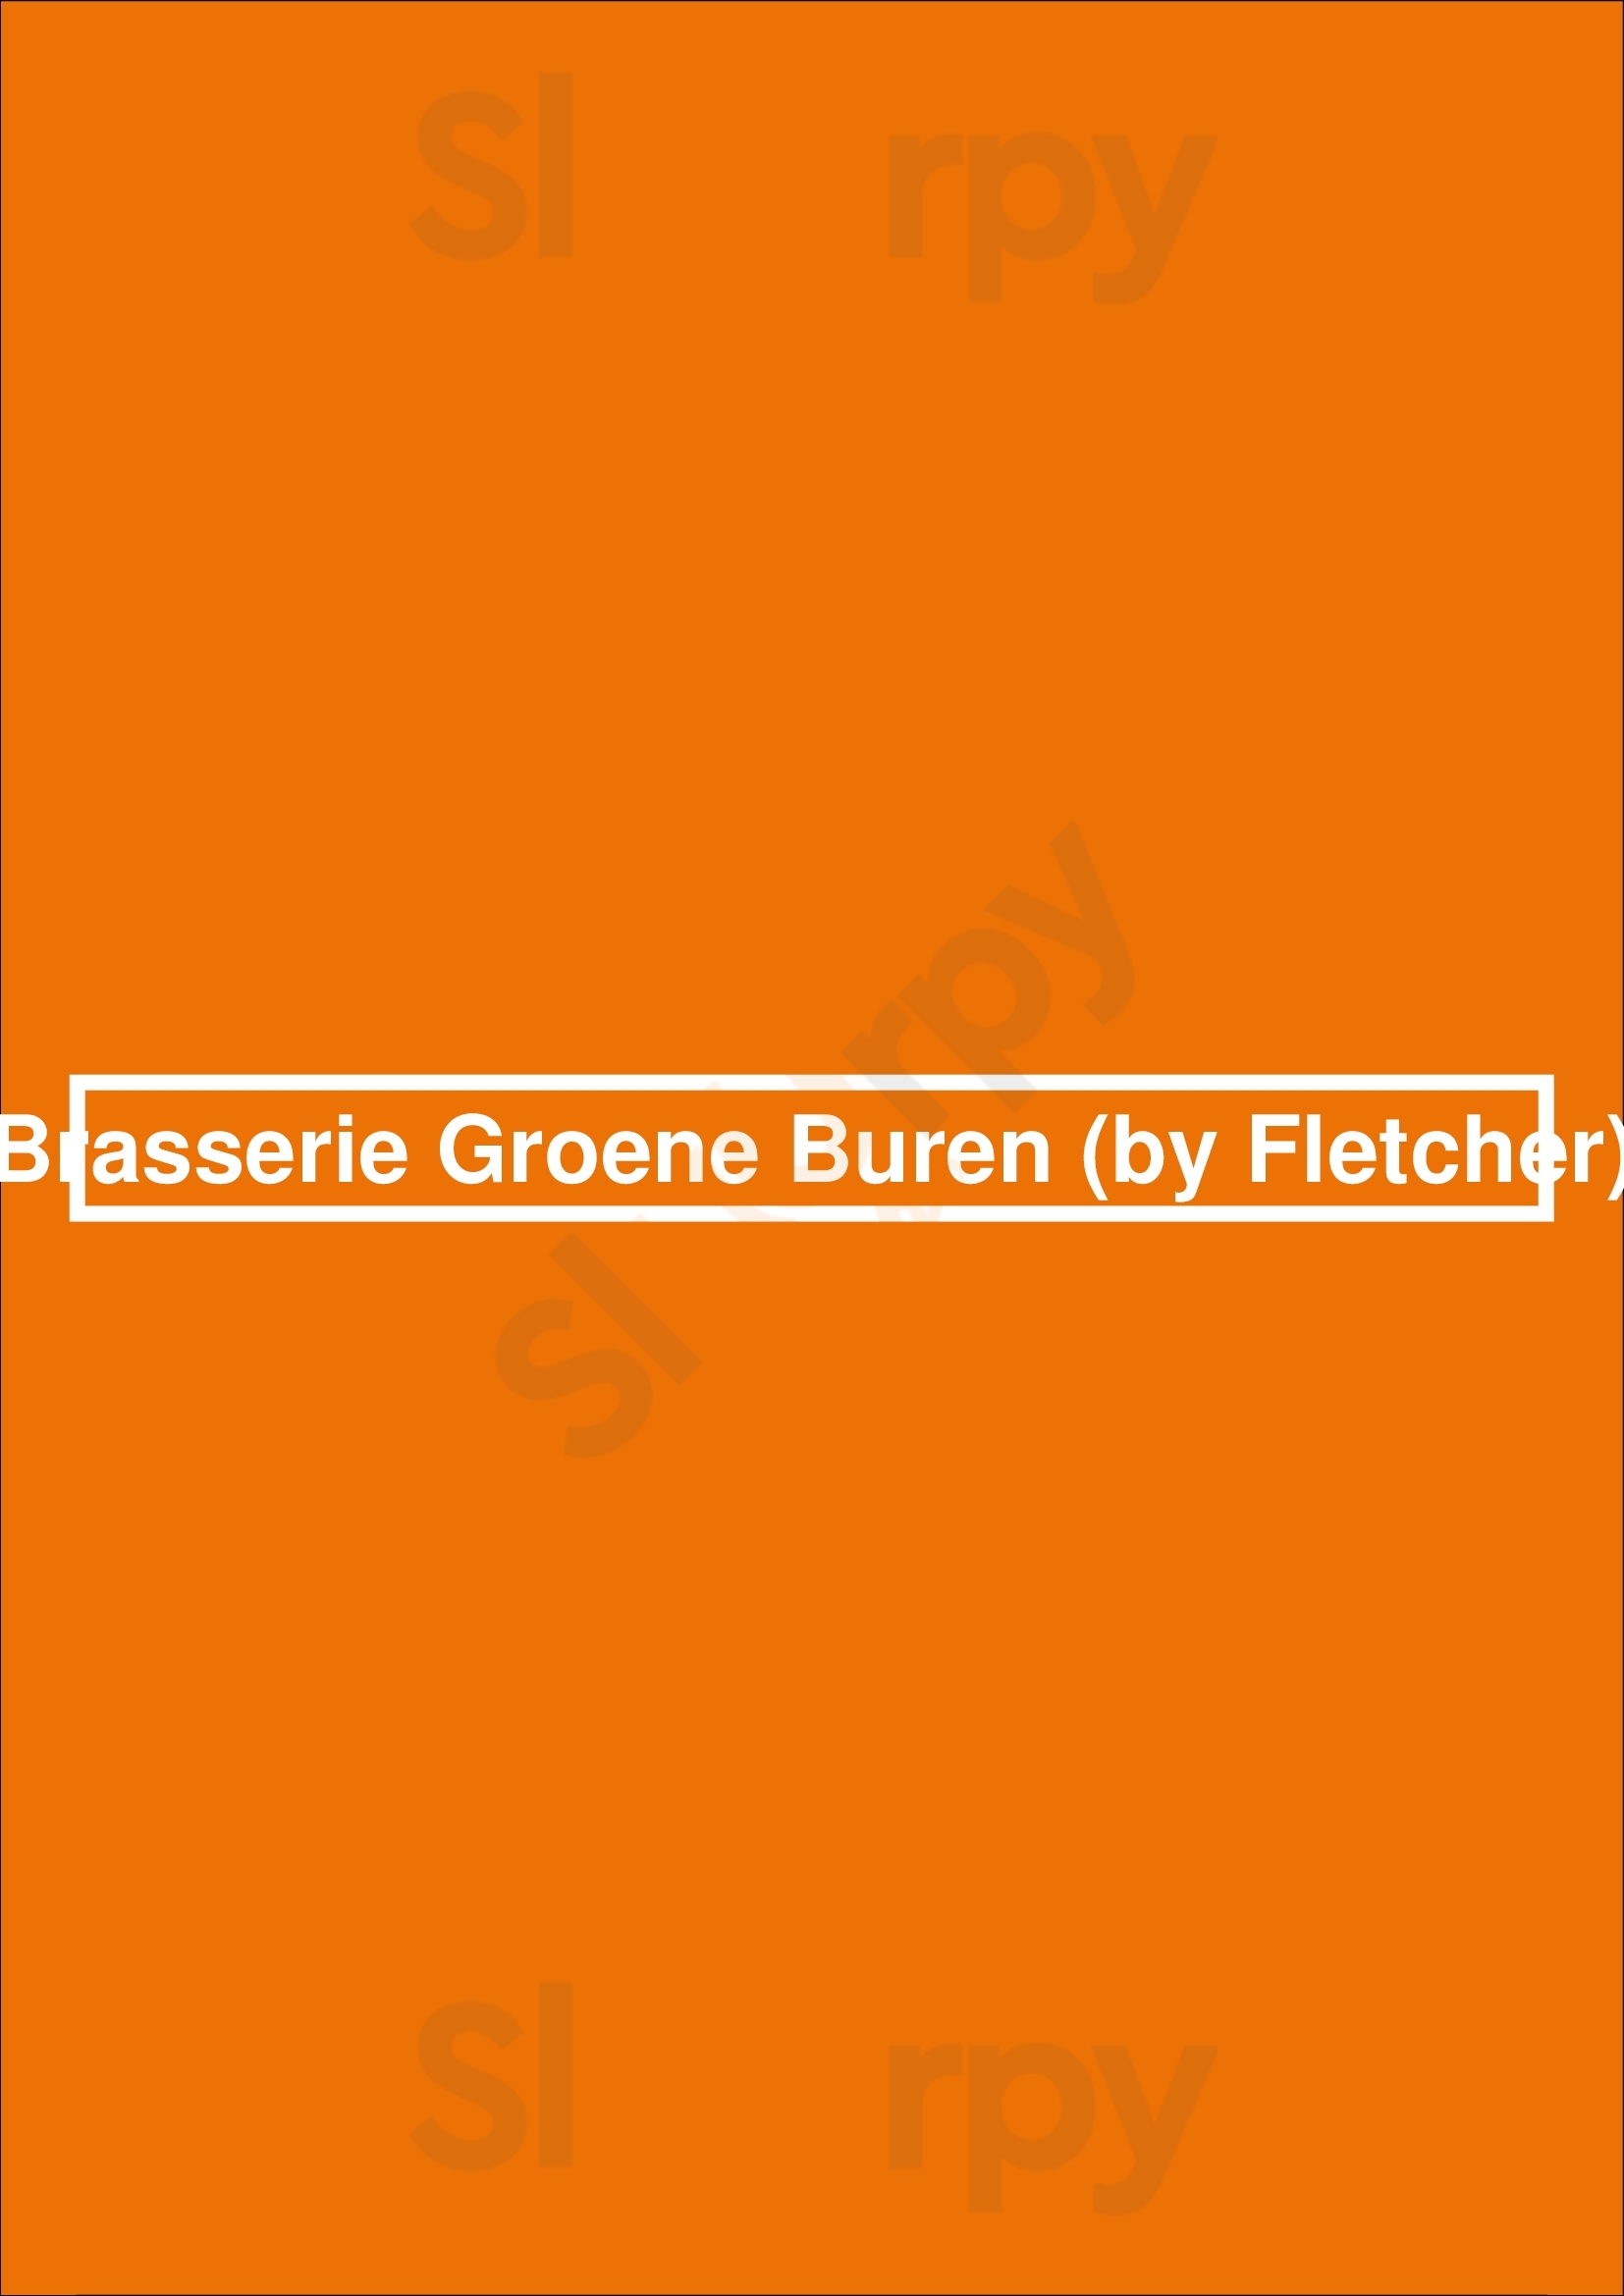 Brasserie Groene Buren (by Fletcher) Emmen Menu - 1